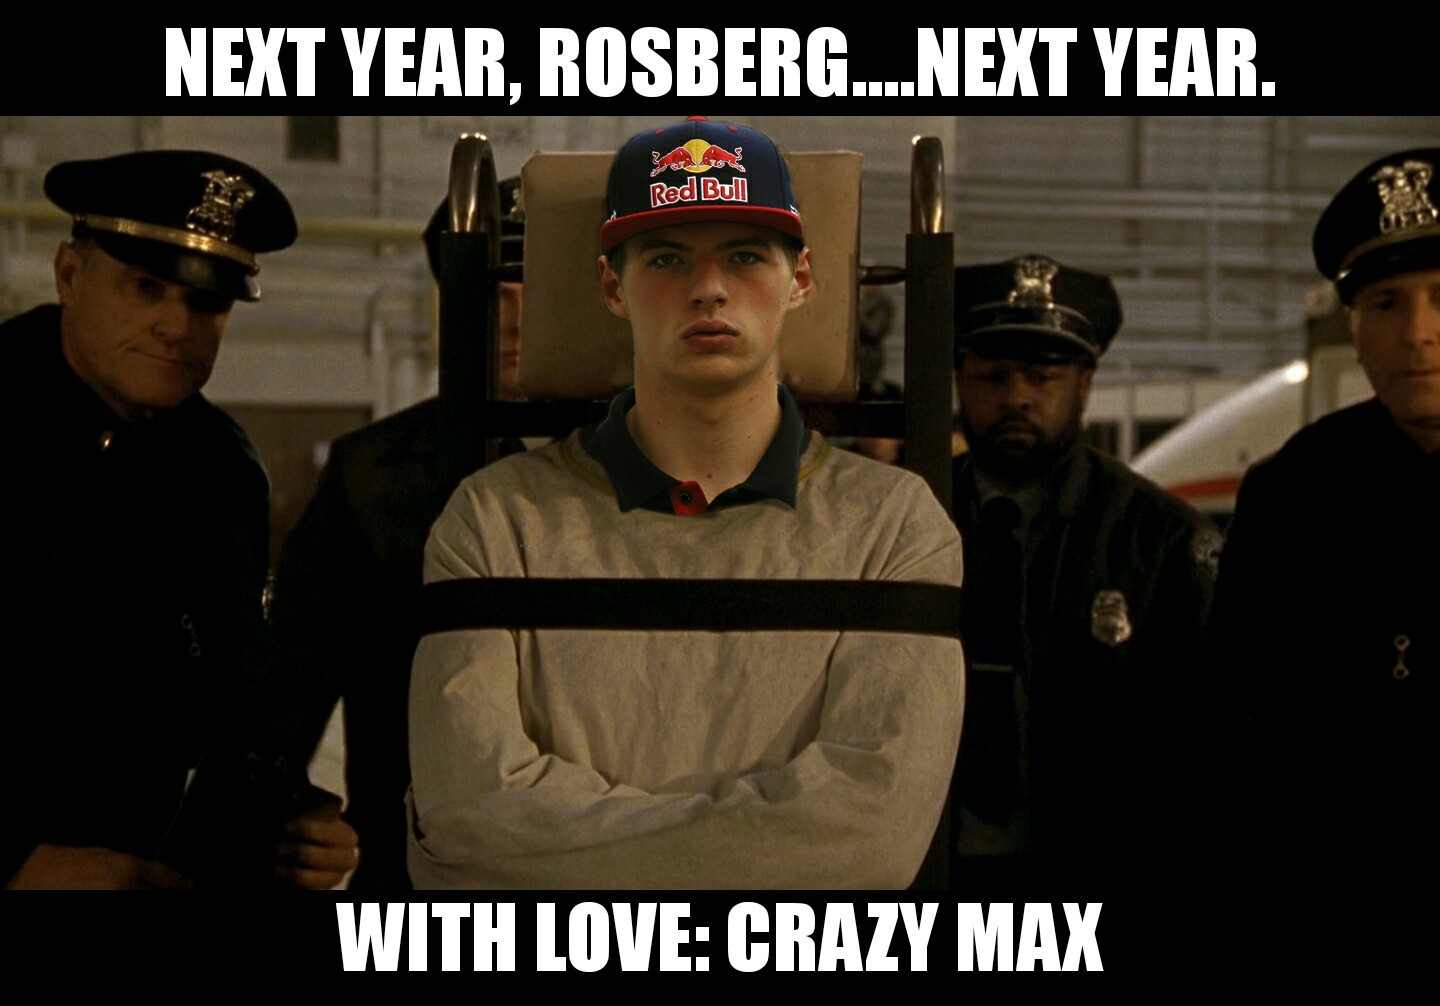 Next year Rosberg